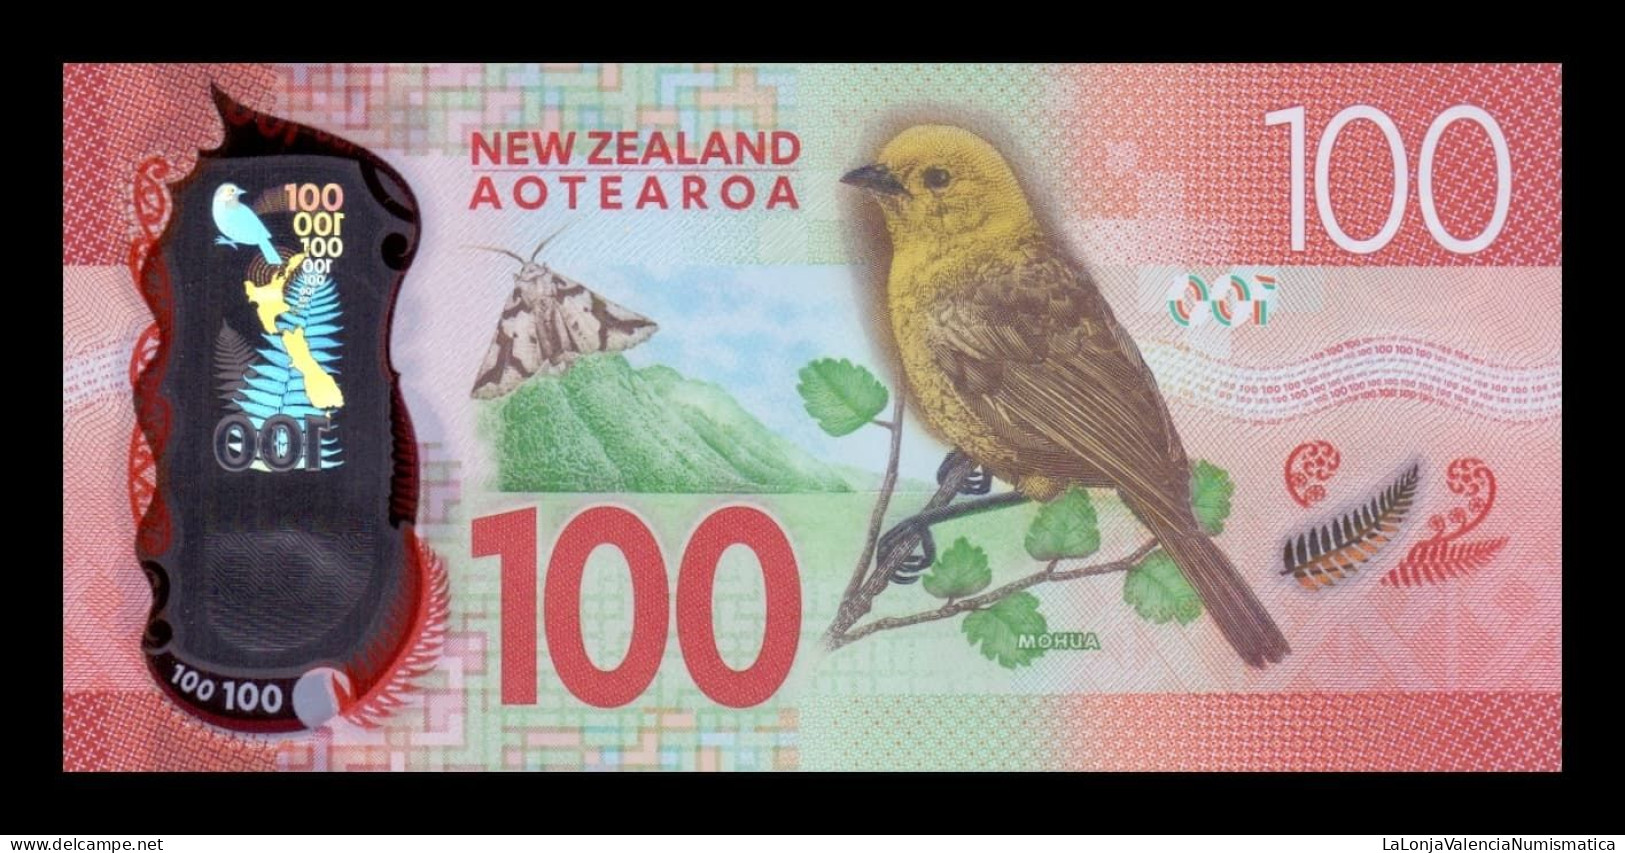 Nueva Zelanda New Zealand 100 Dollars 2016 Pick 195 Polymer Sc Unc - Neuseeland